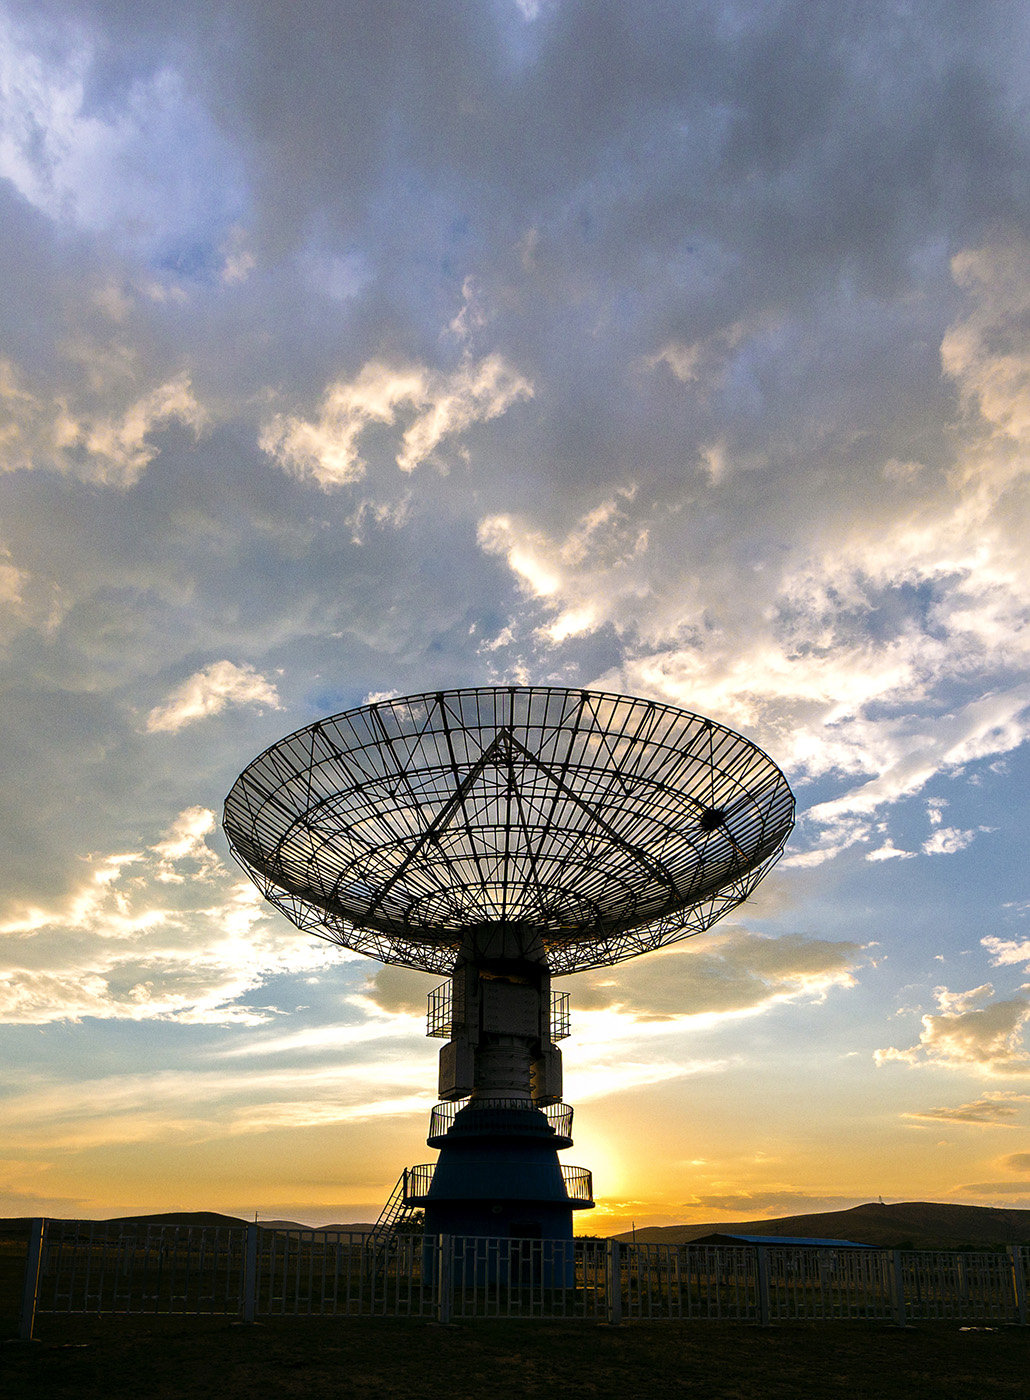 Sunset at a satelite